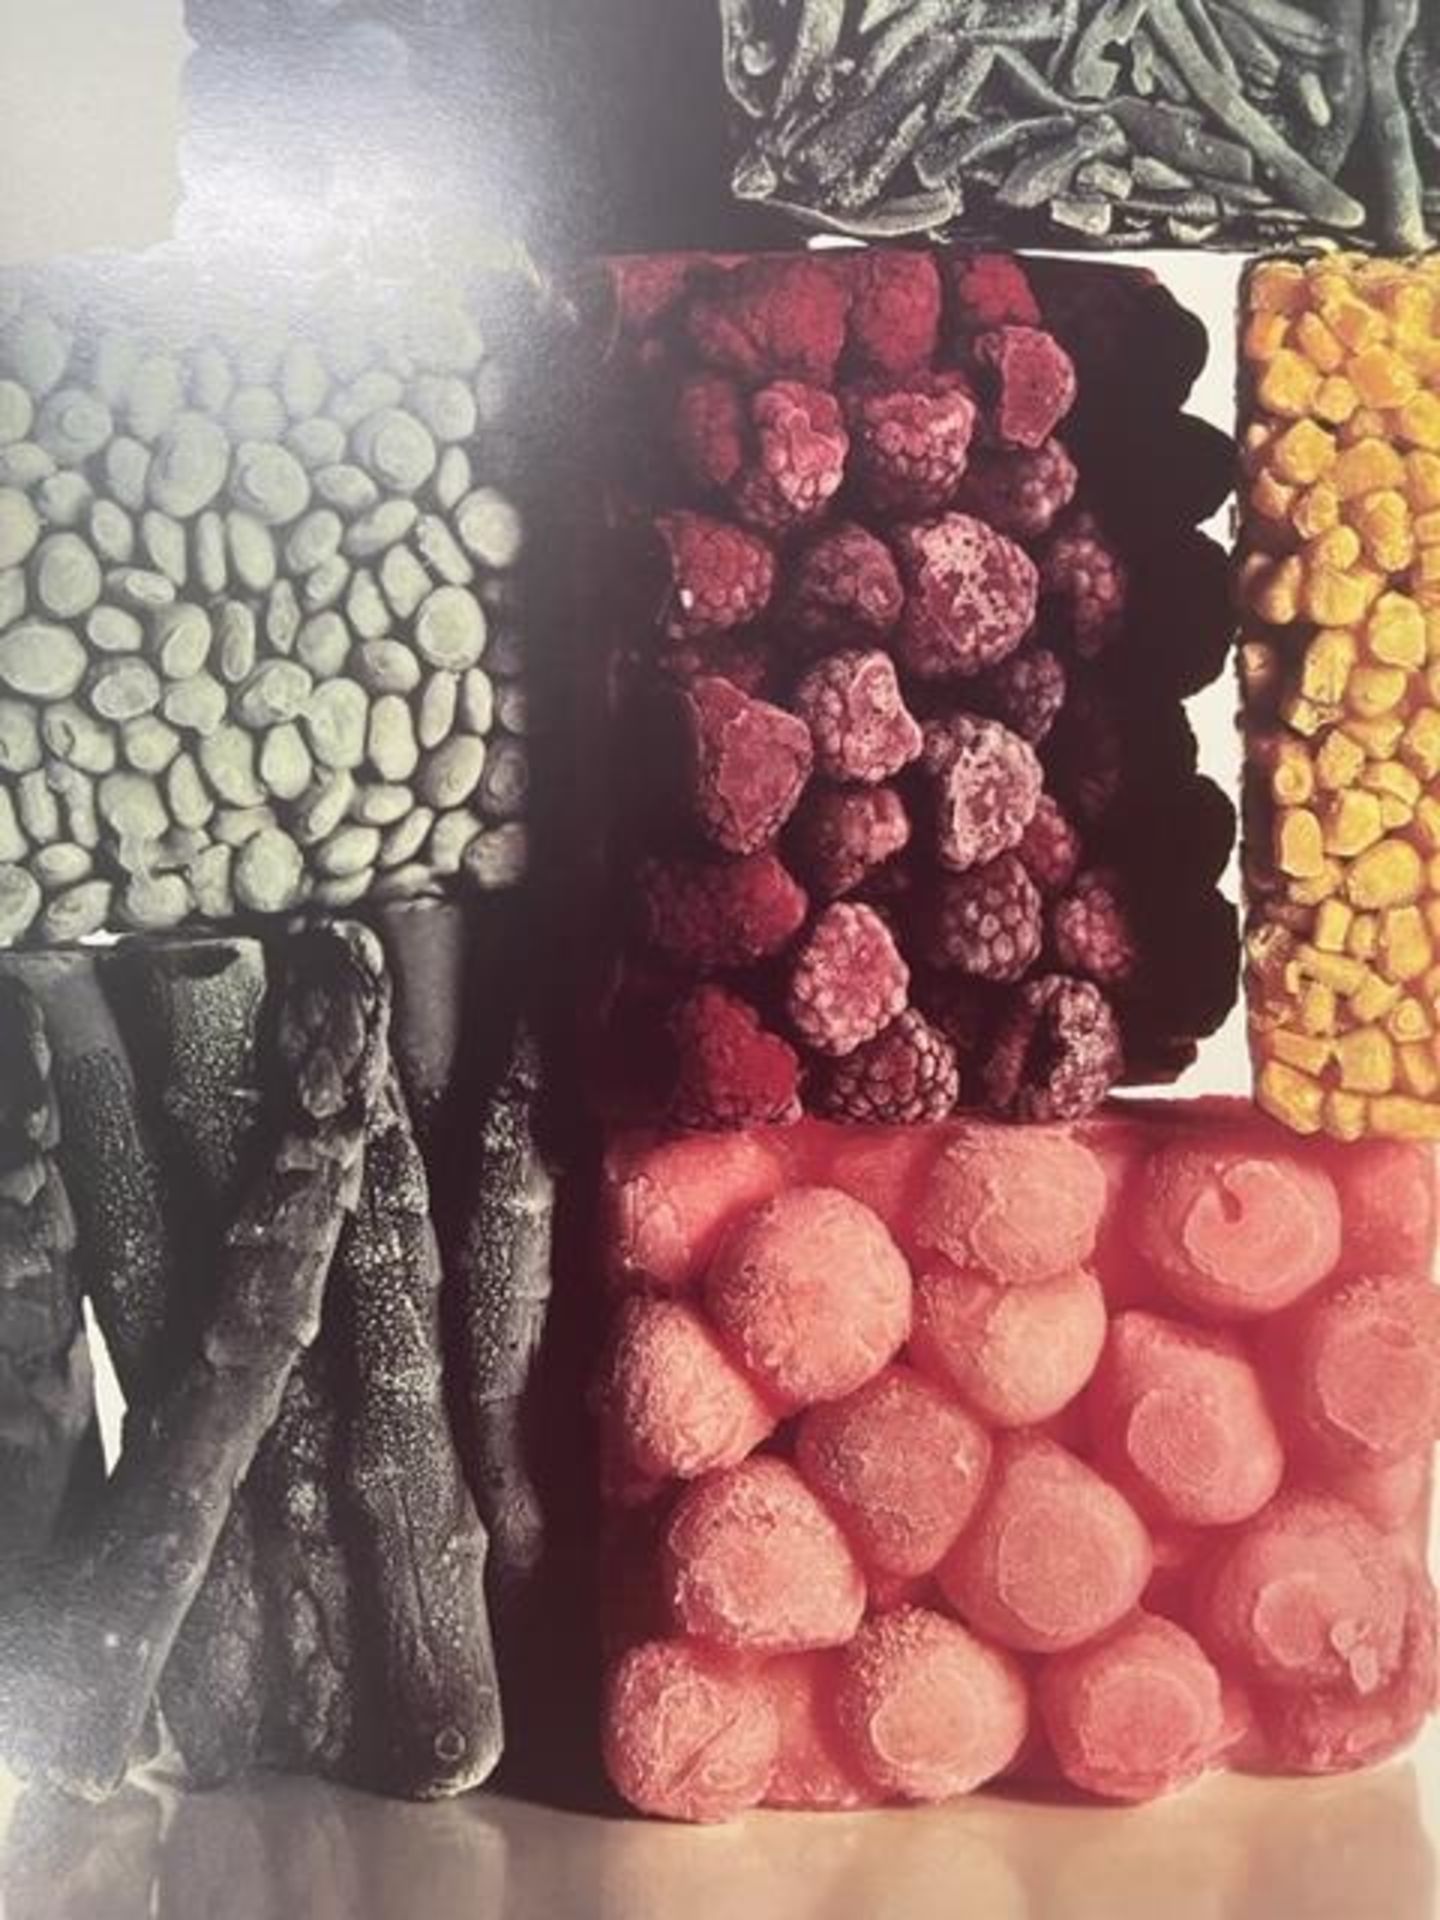 Irving Penn "Frozen Foods" Print. - Image 4 of 6